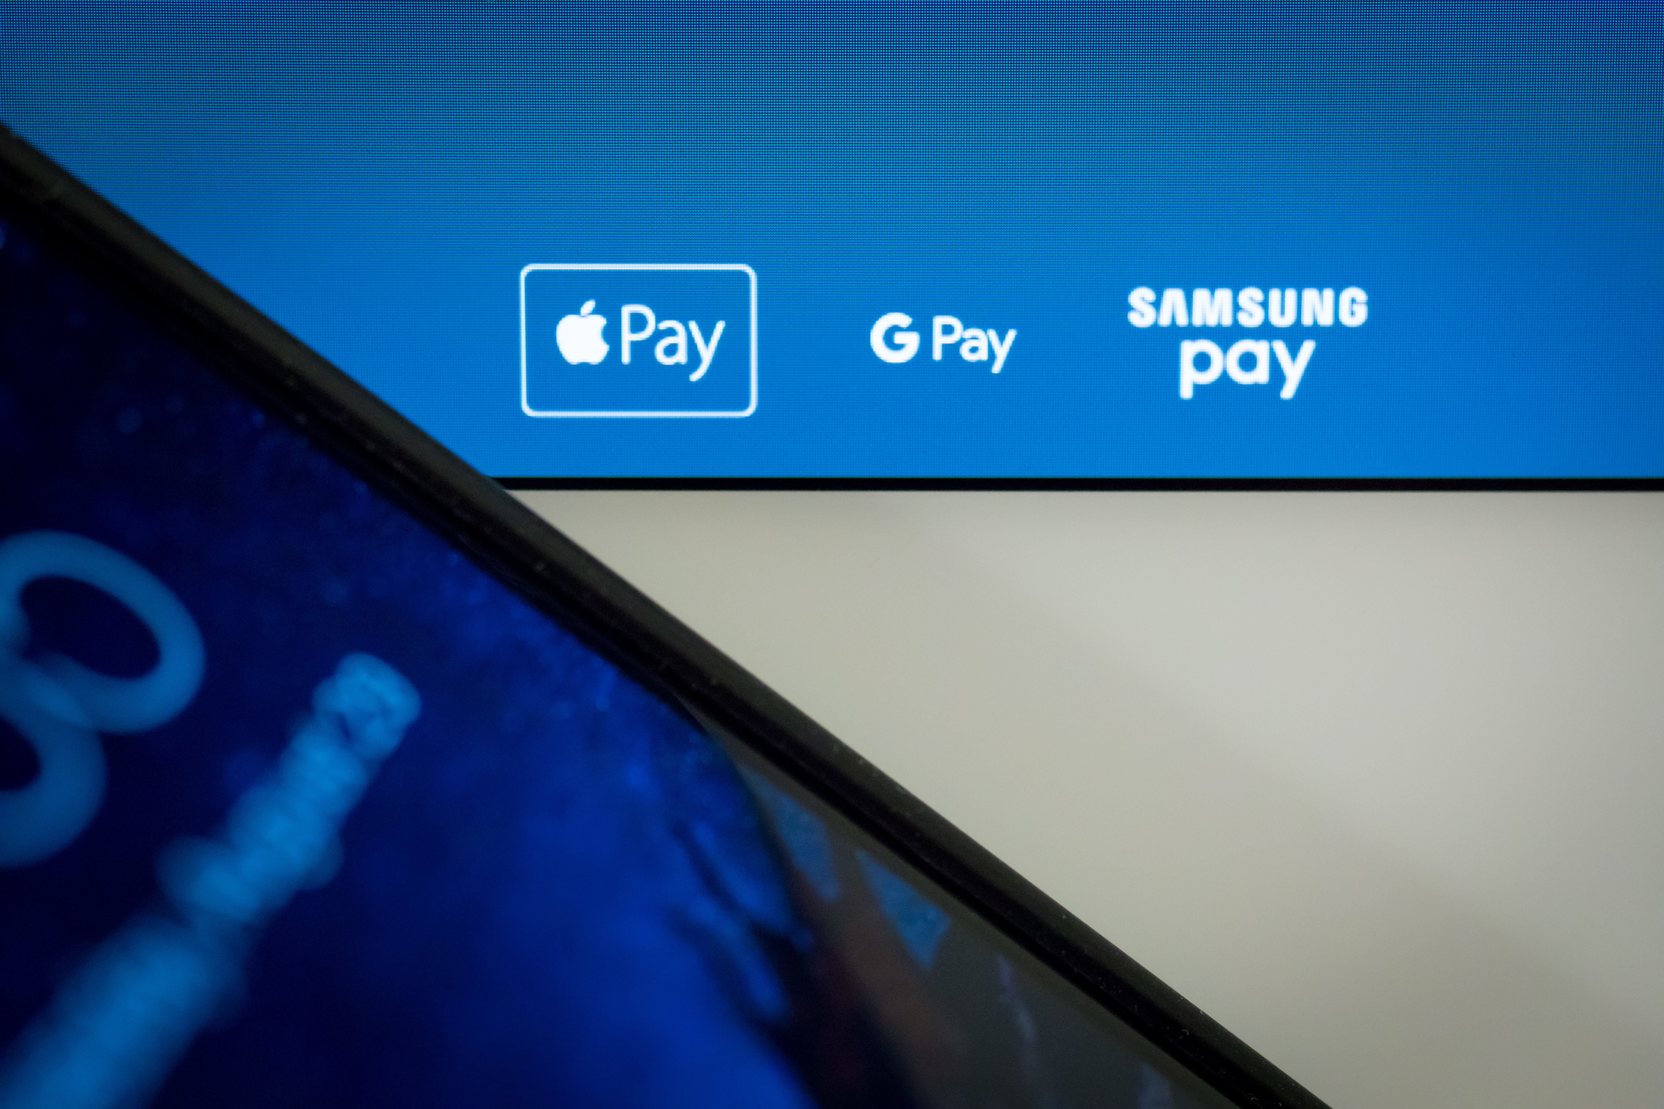   : Samsung Pay        